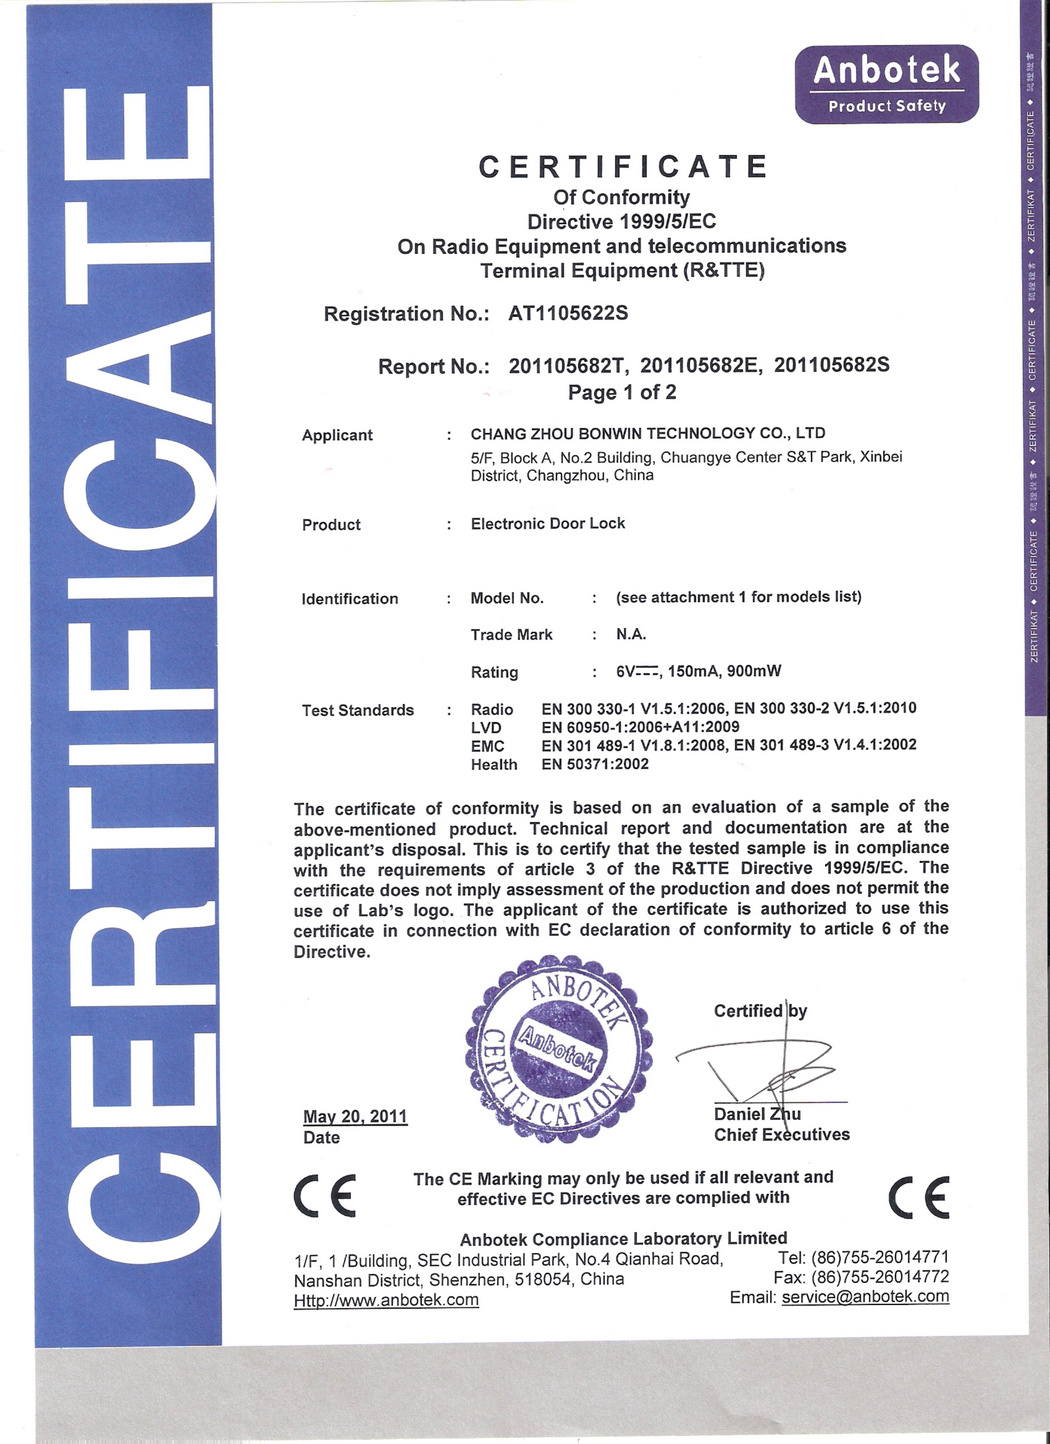 CE certificate for Bonwin Electronic Door Lock